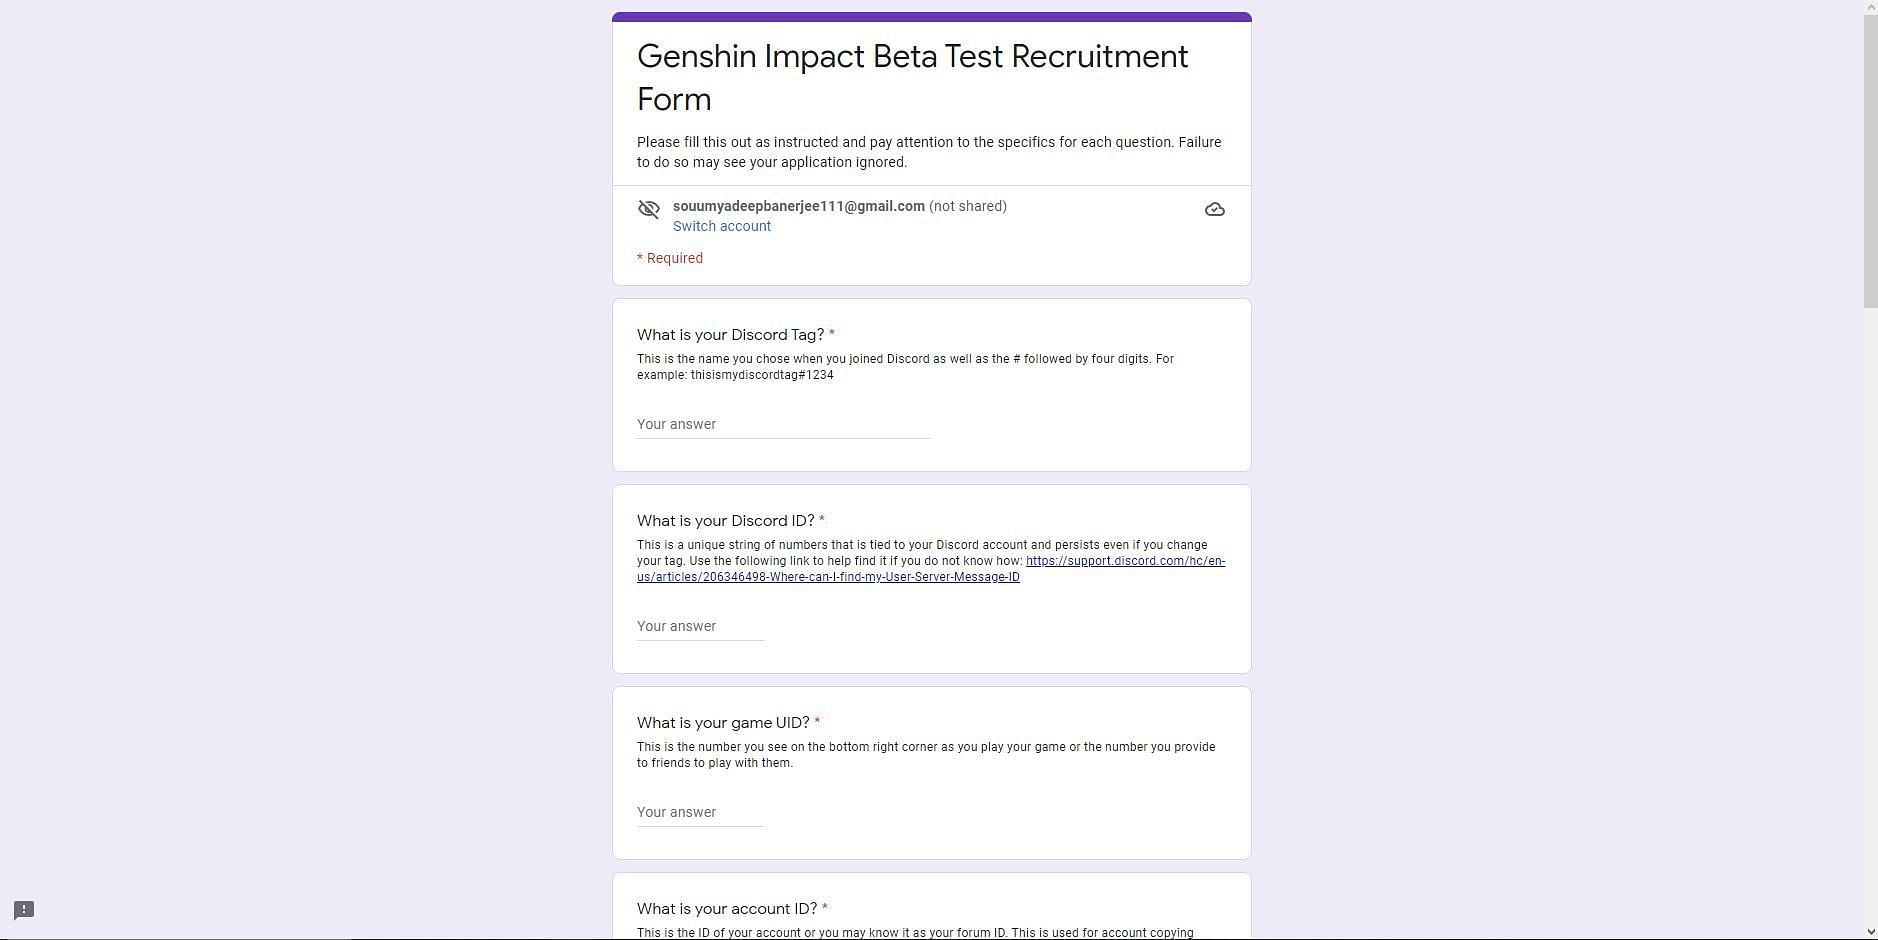 The Genshin Impact beta 2.4 application form (Image via GoogleDocs)